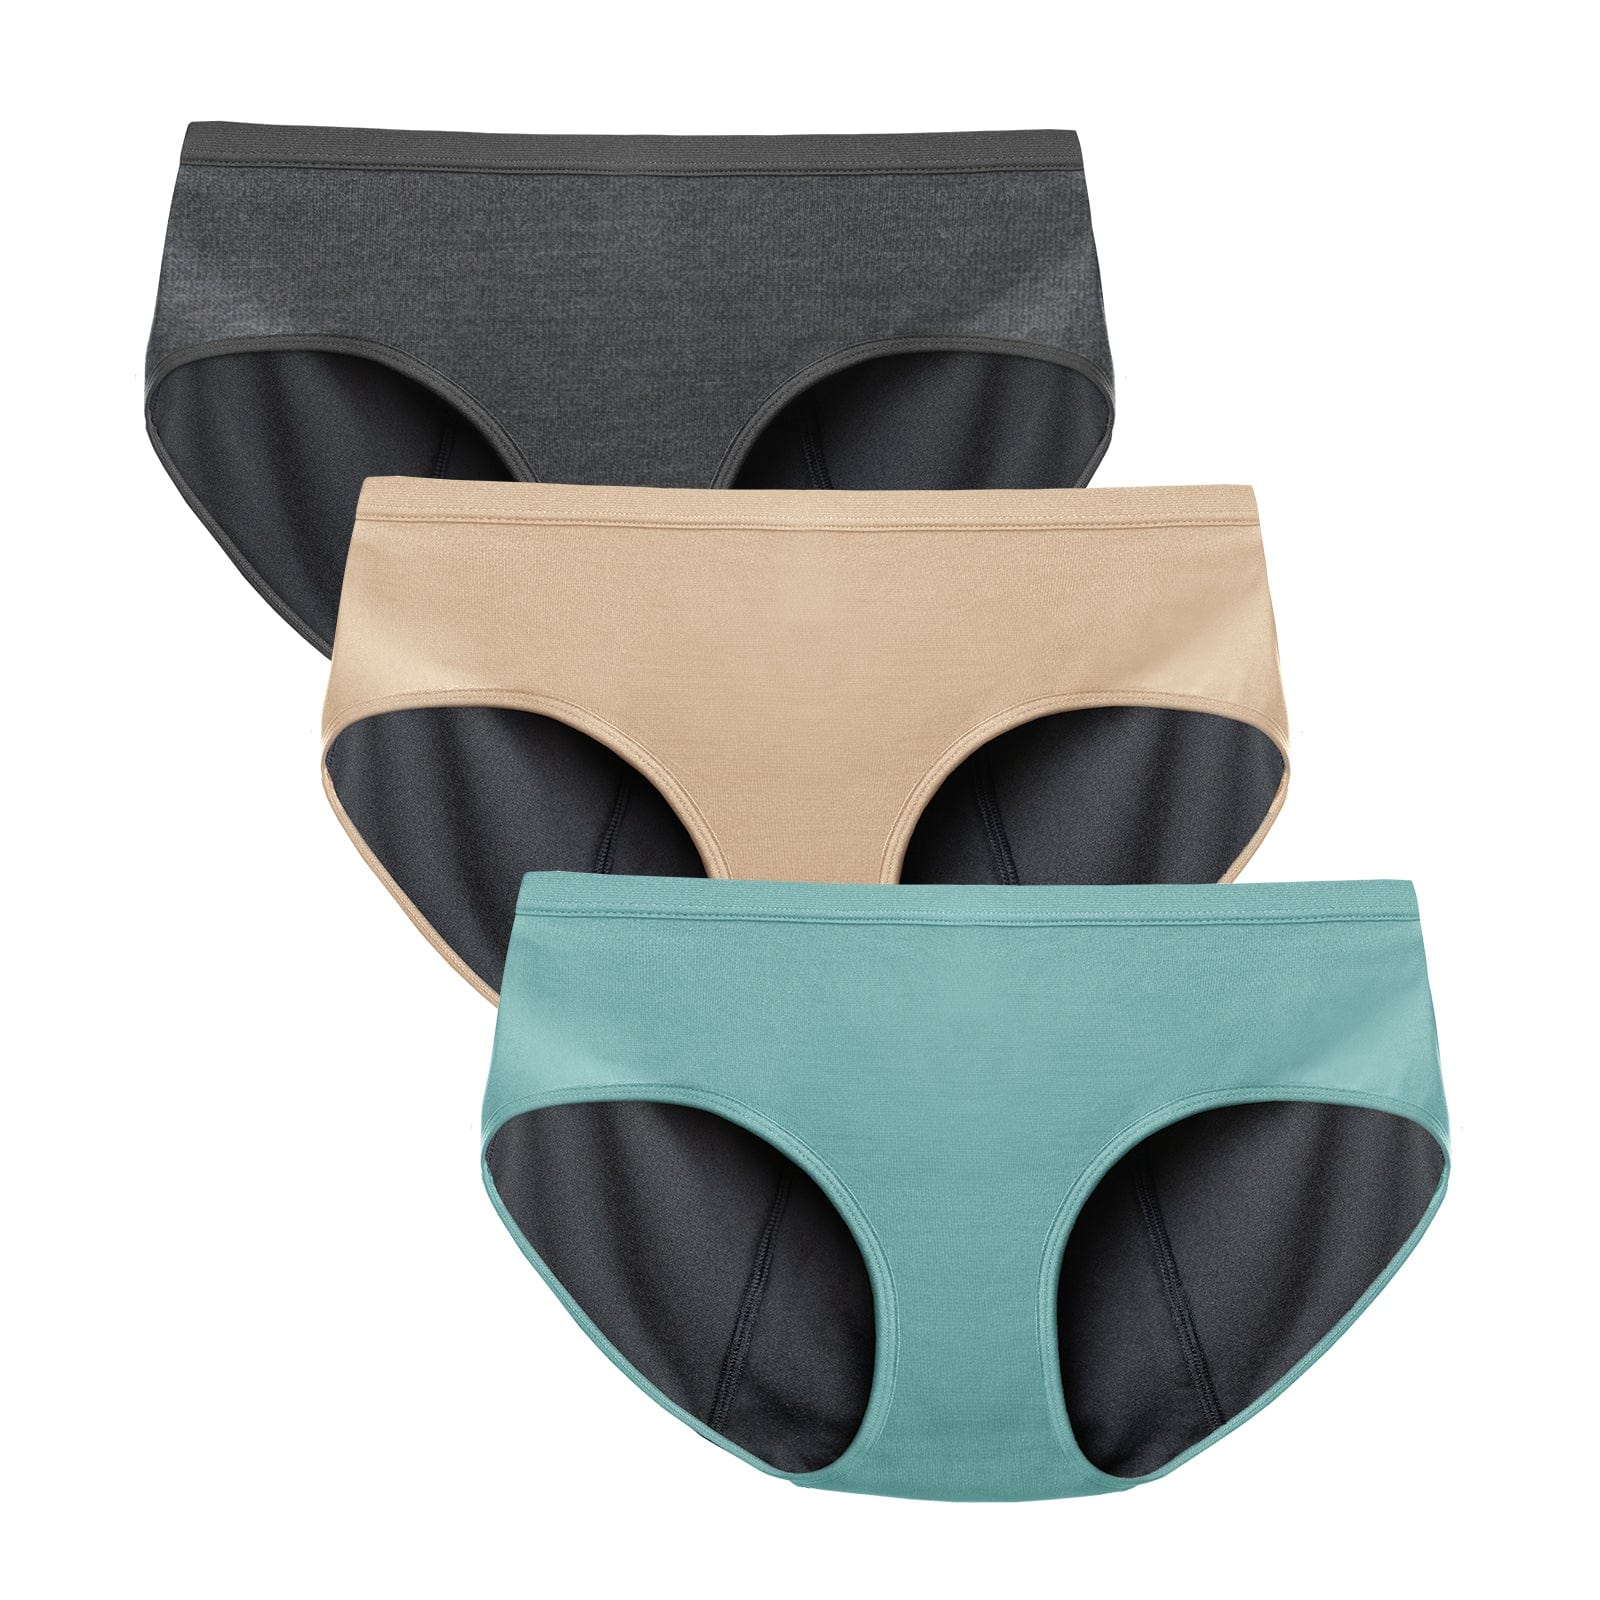 TIICHOO Period Underwear for Women Silky Soft Absorbent Hipster